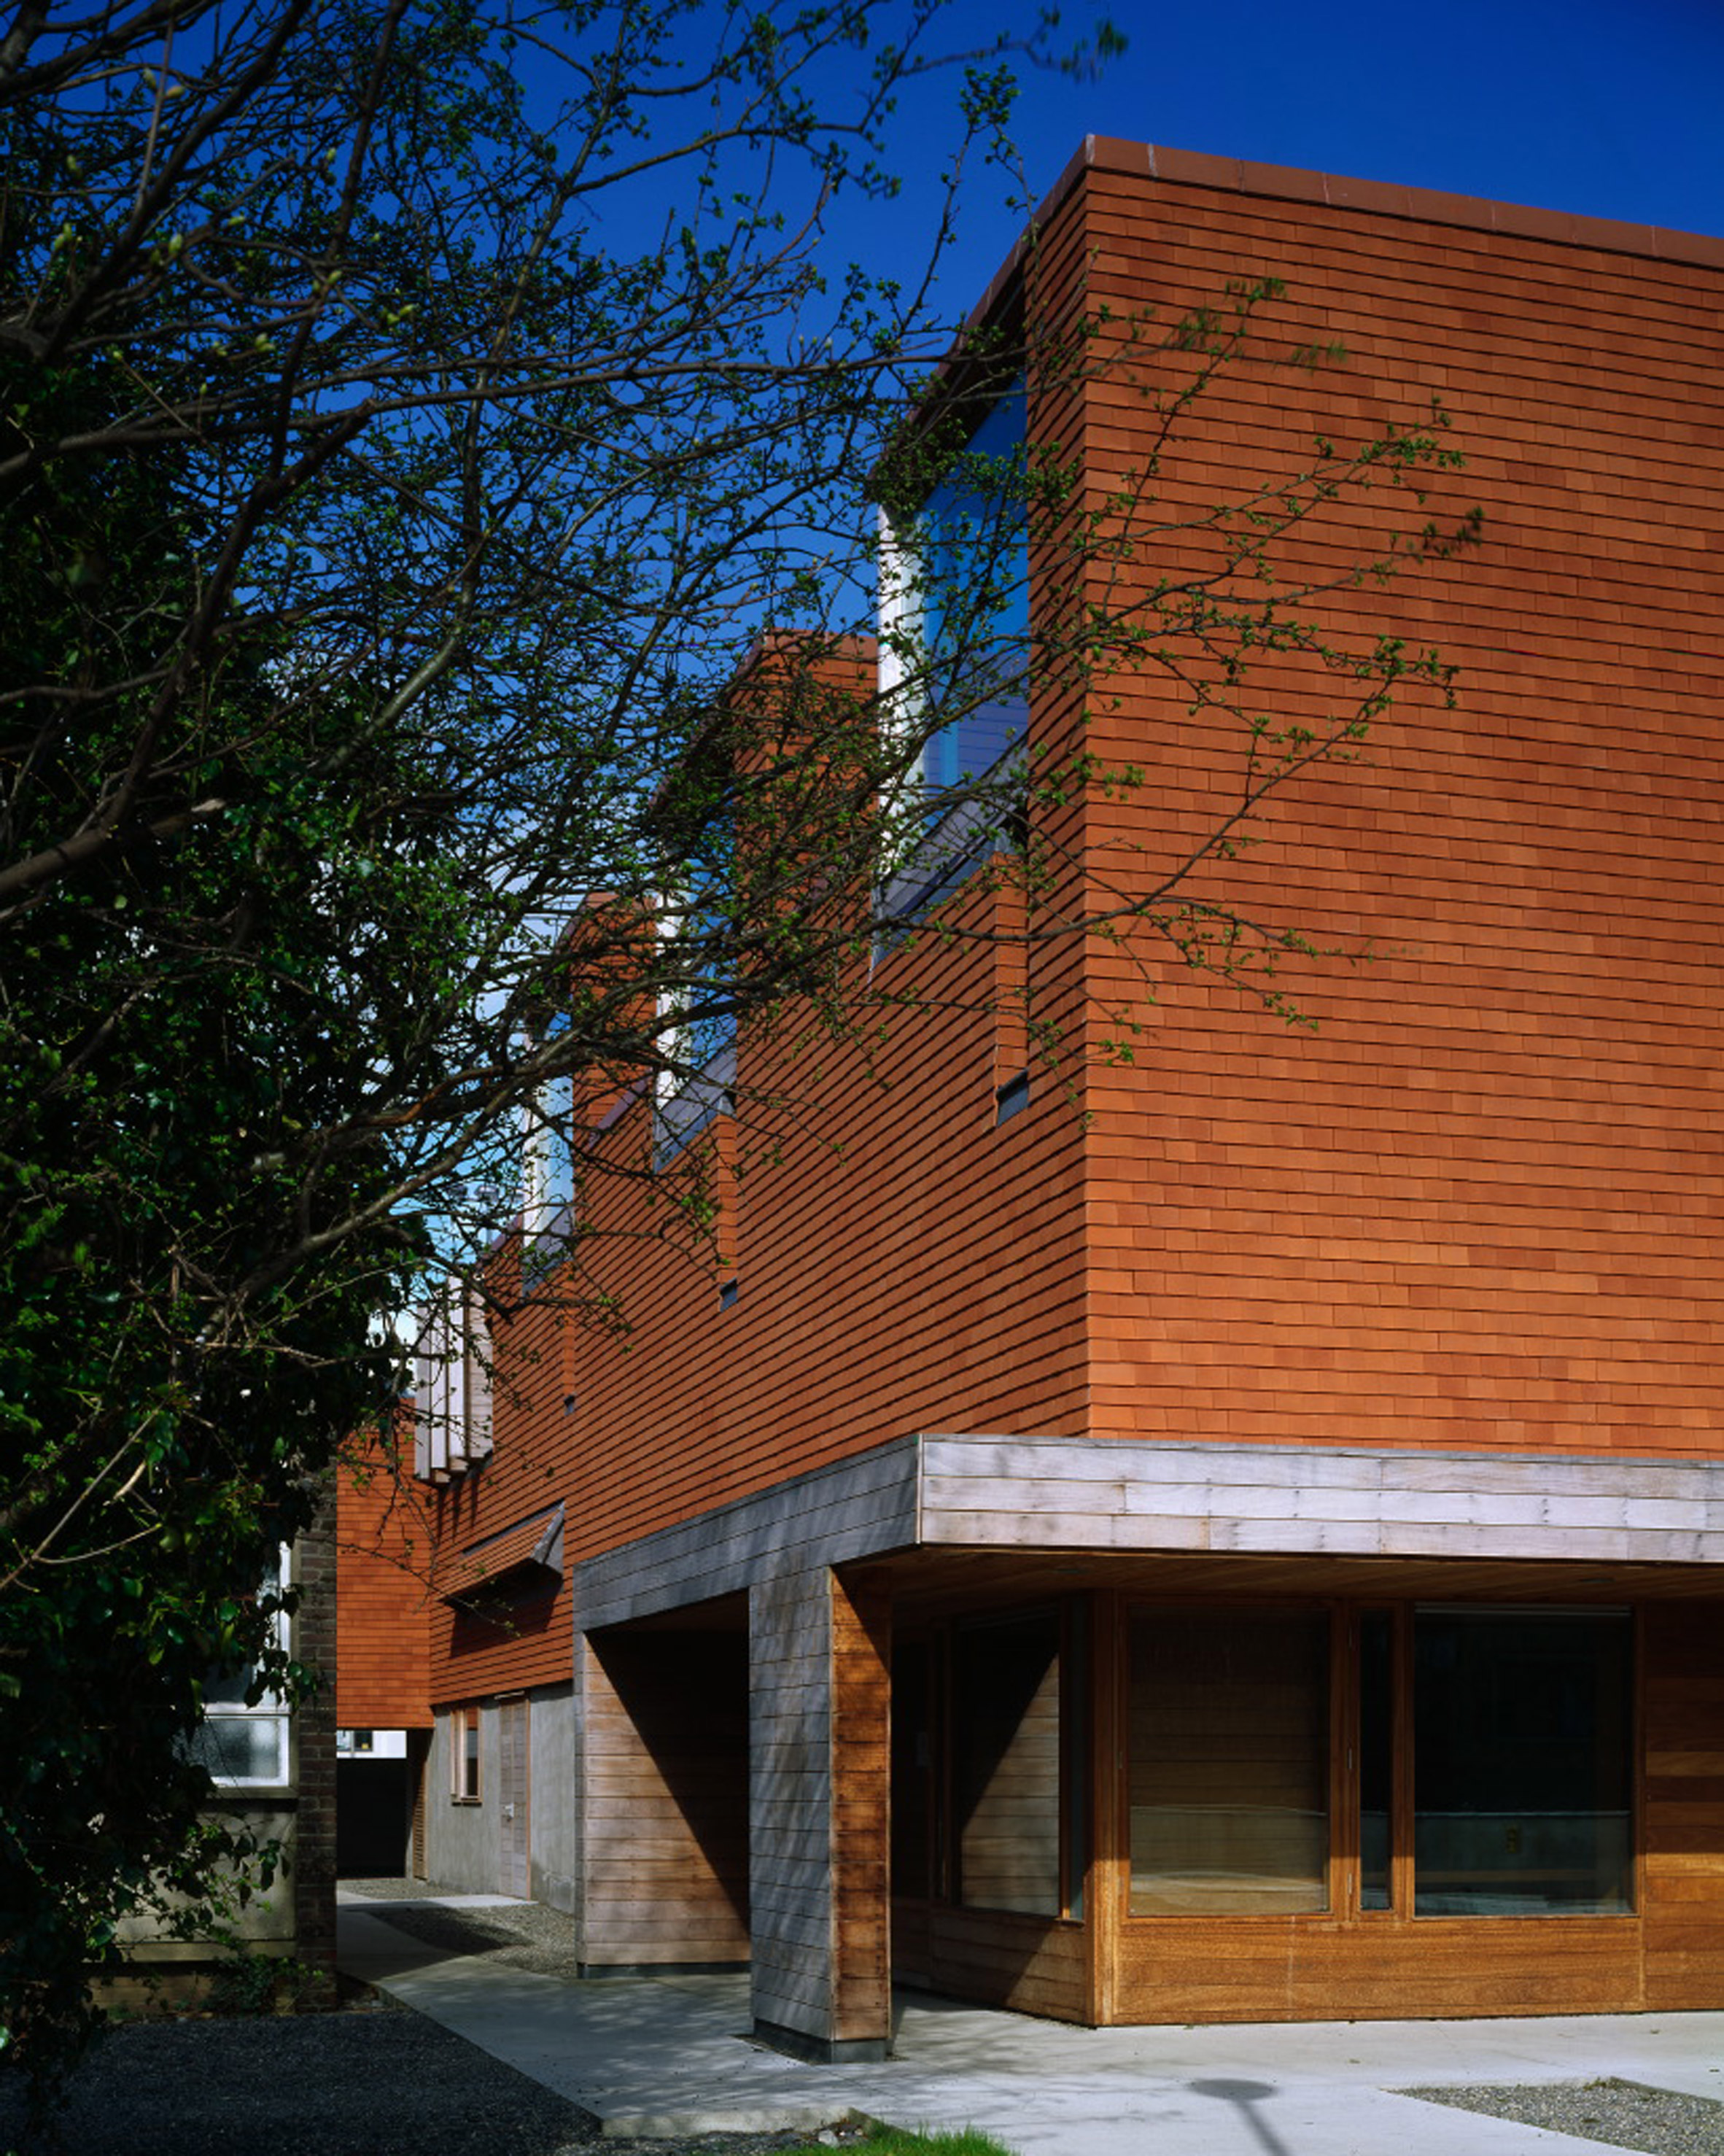 Urban Institute of Ireland; University College Dublin, Ireland, 2002, by Universita Luigi Bocconi School of Economics; Milan, Italy, 2008, by Grafton Architects